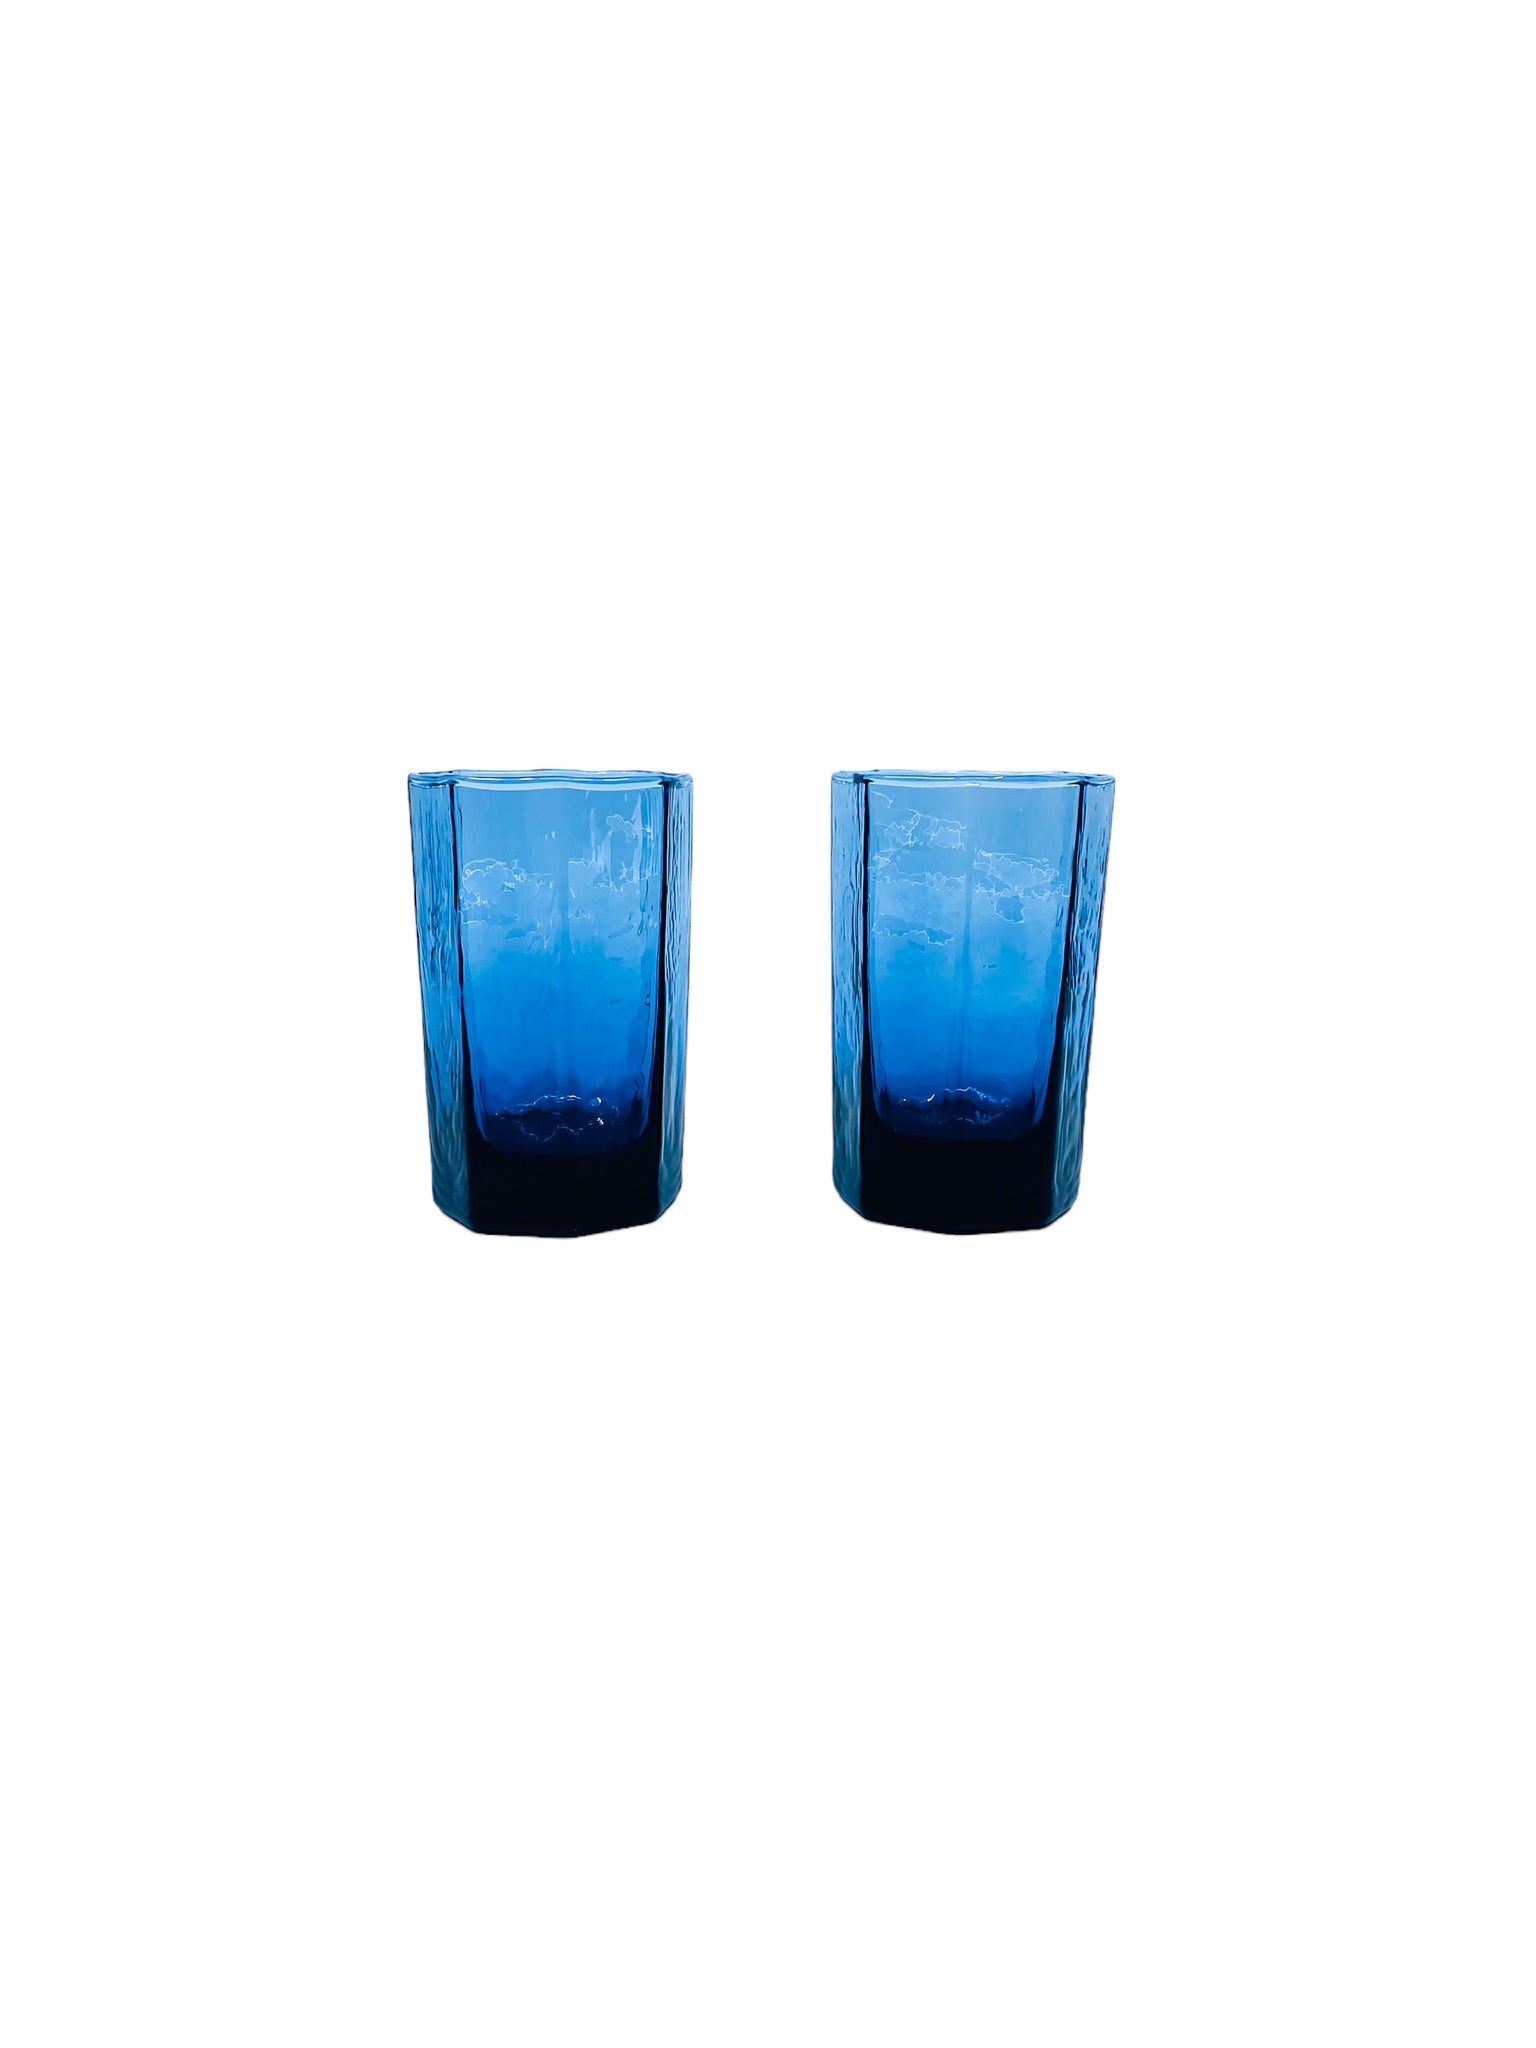 Vintage Libbey “Facet” Smoked Blue Juice Glasses, Pair